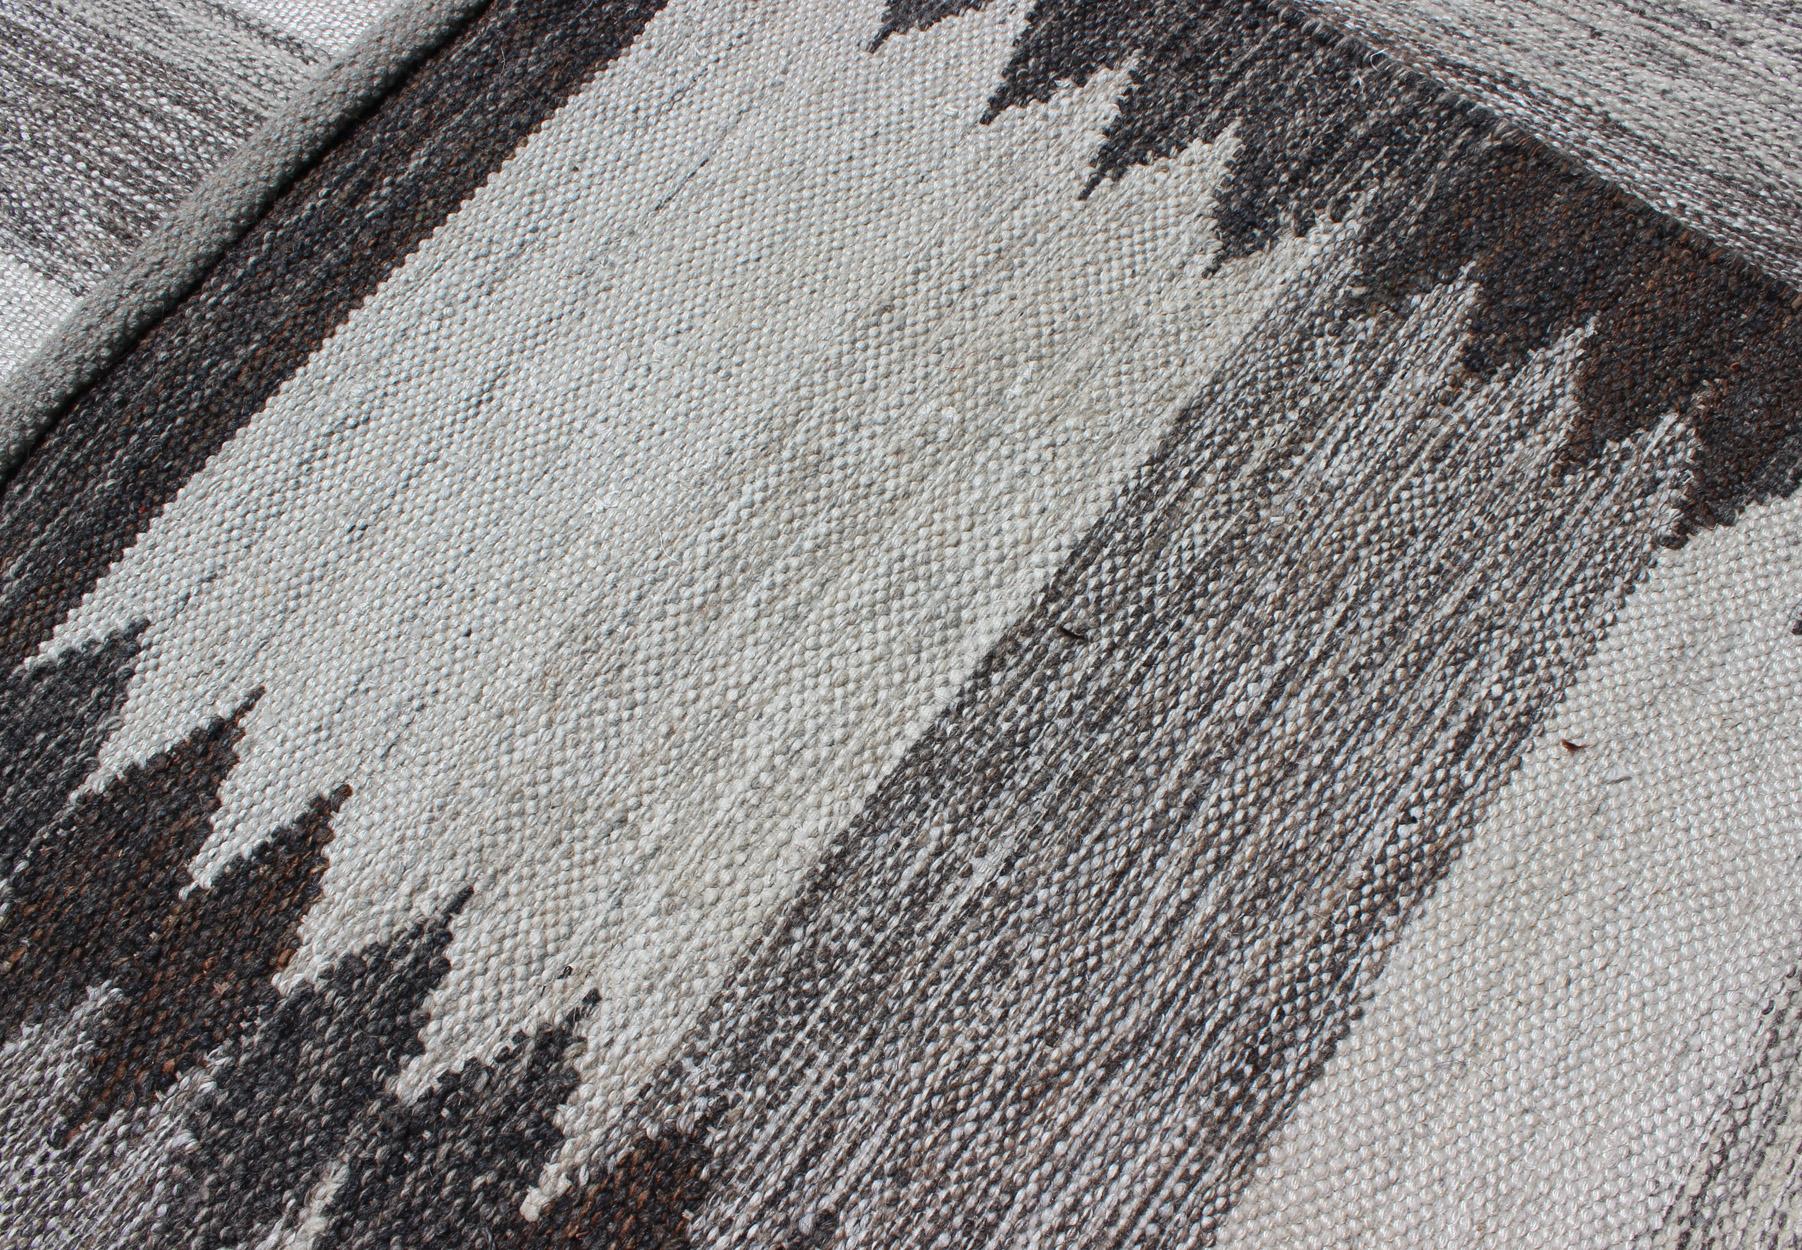 Modern Scandinavian Flat-Weave Rug with Geometric Stripe Design in Gray Tones 4